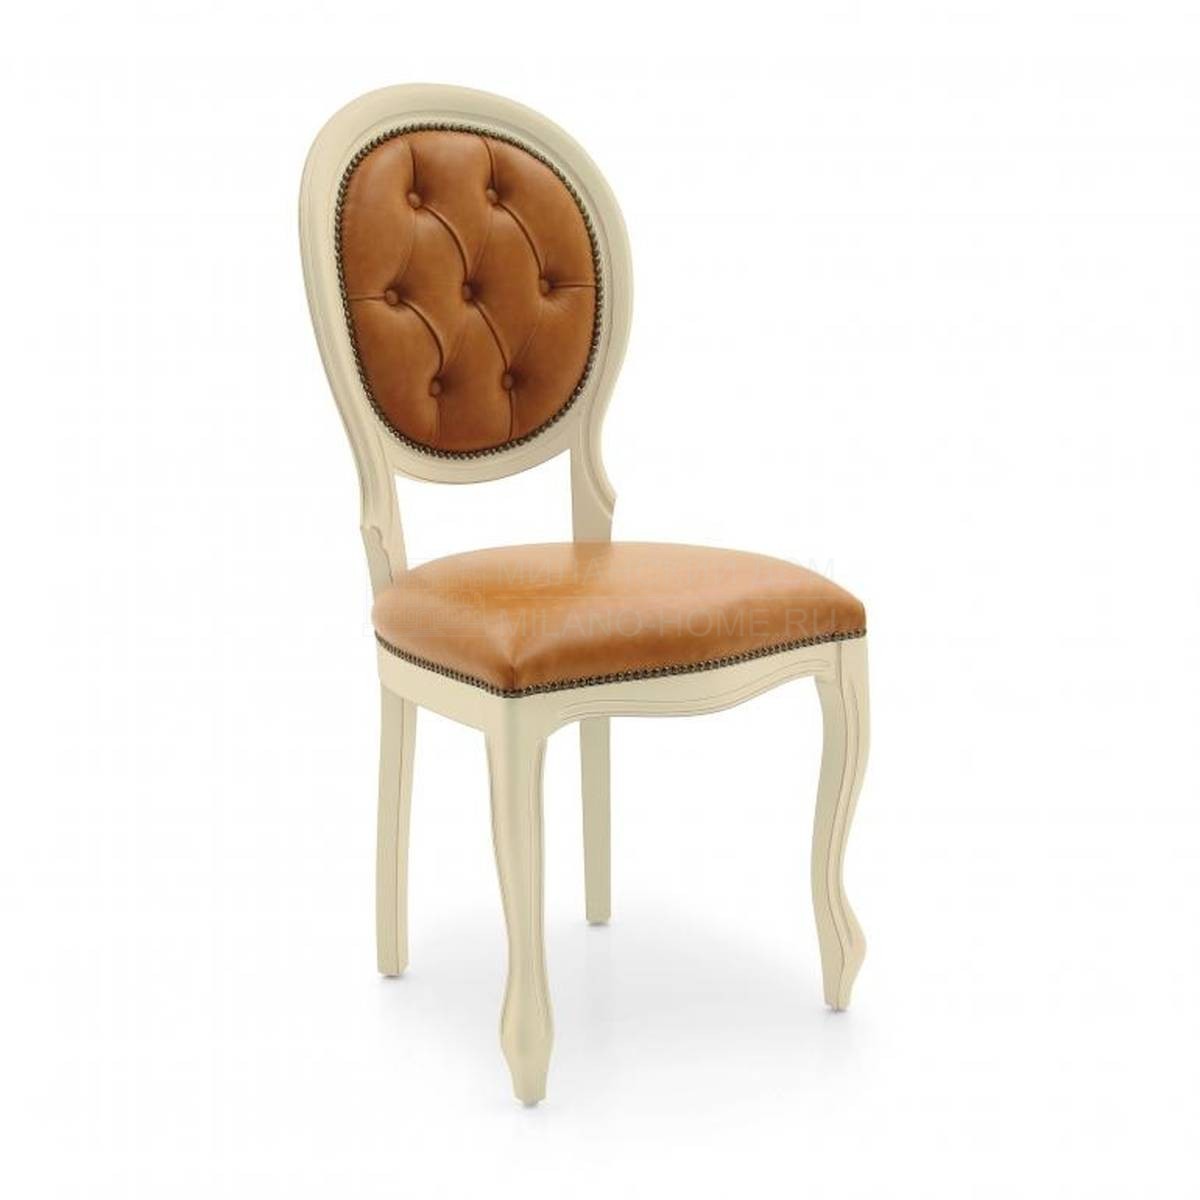 Кожаный стул Liberty leather из Италии фабрики SEVEN SEDIE